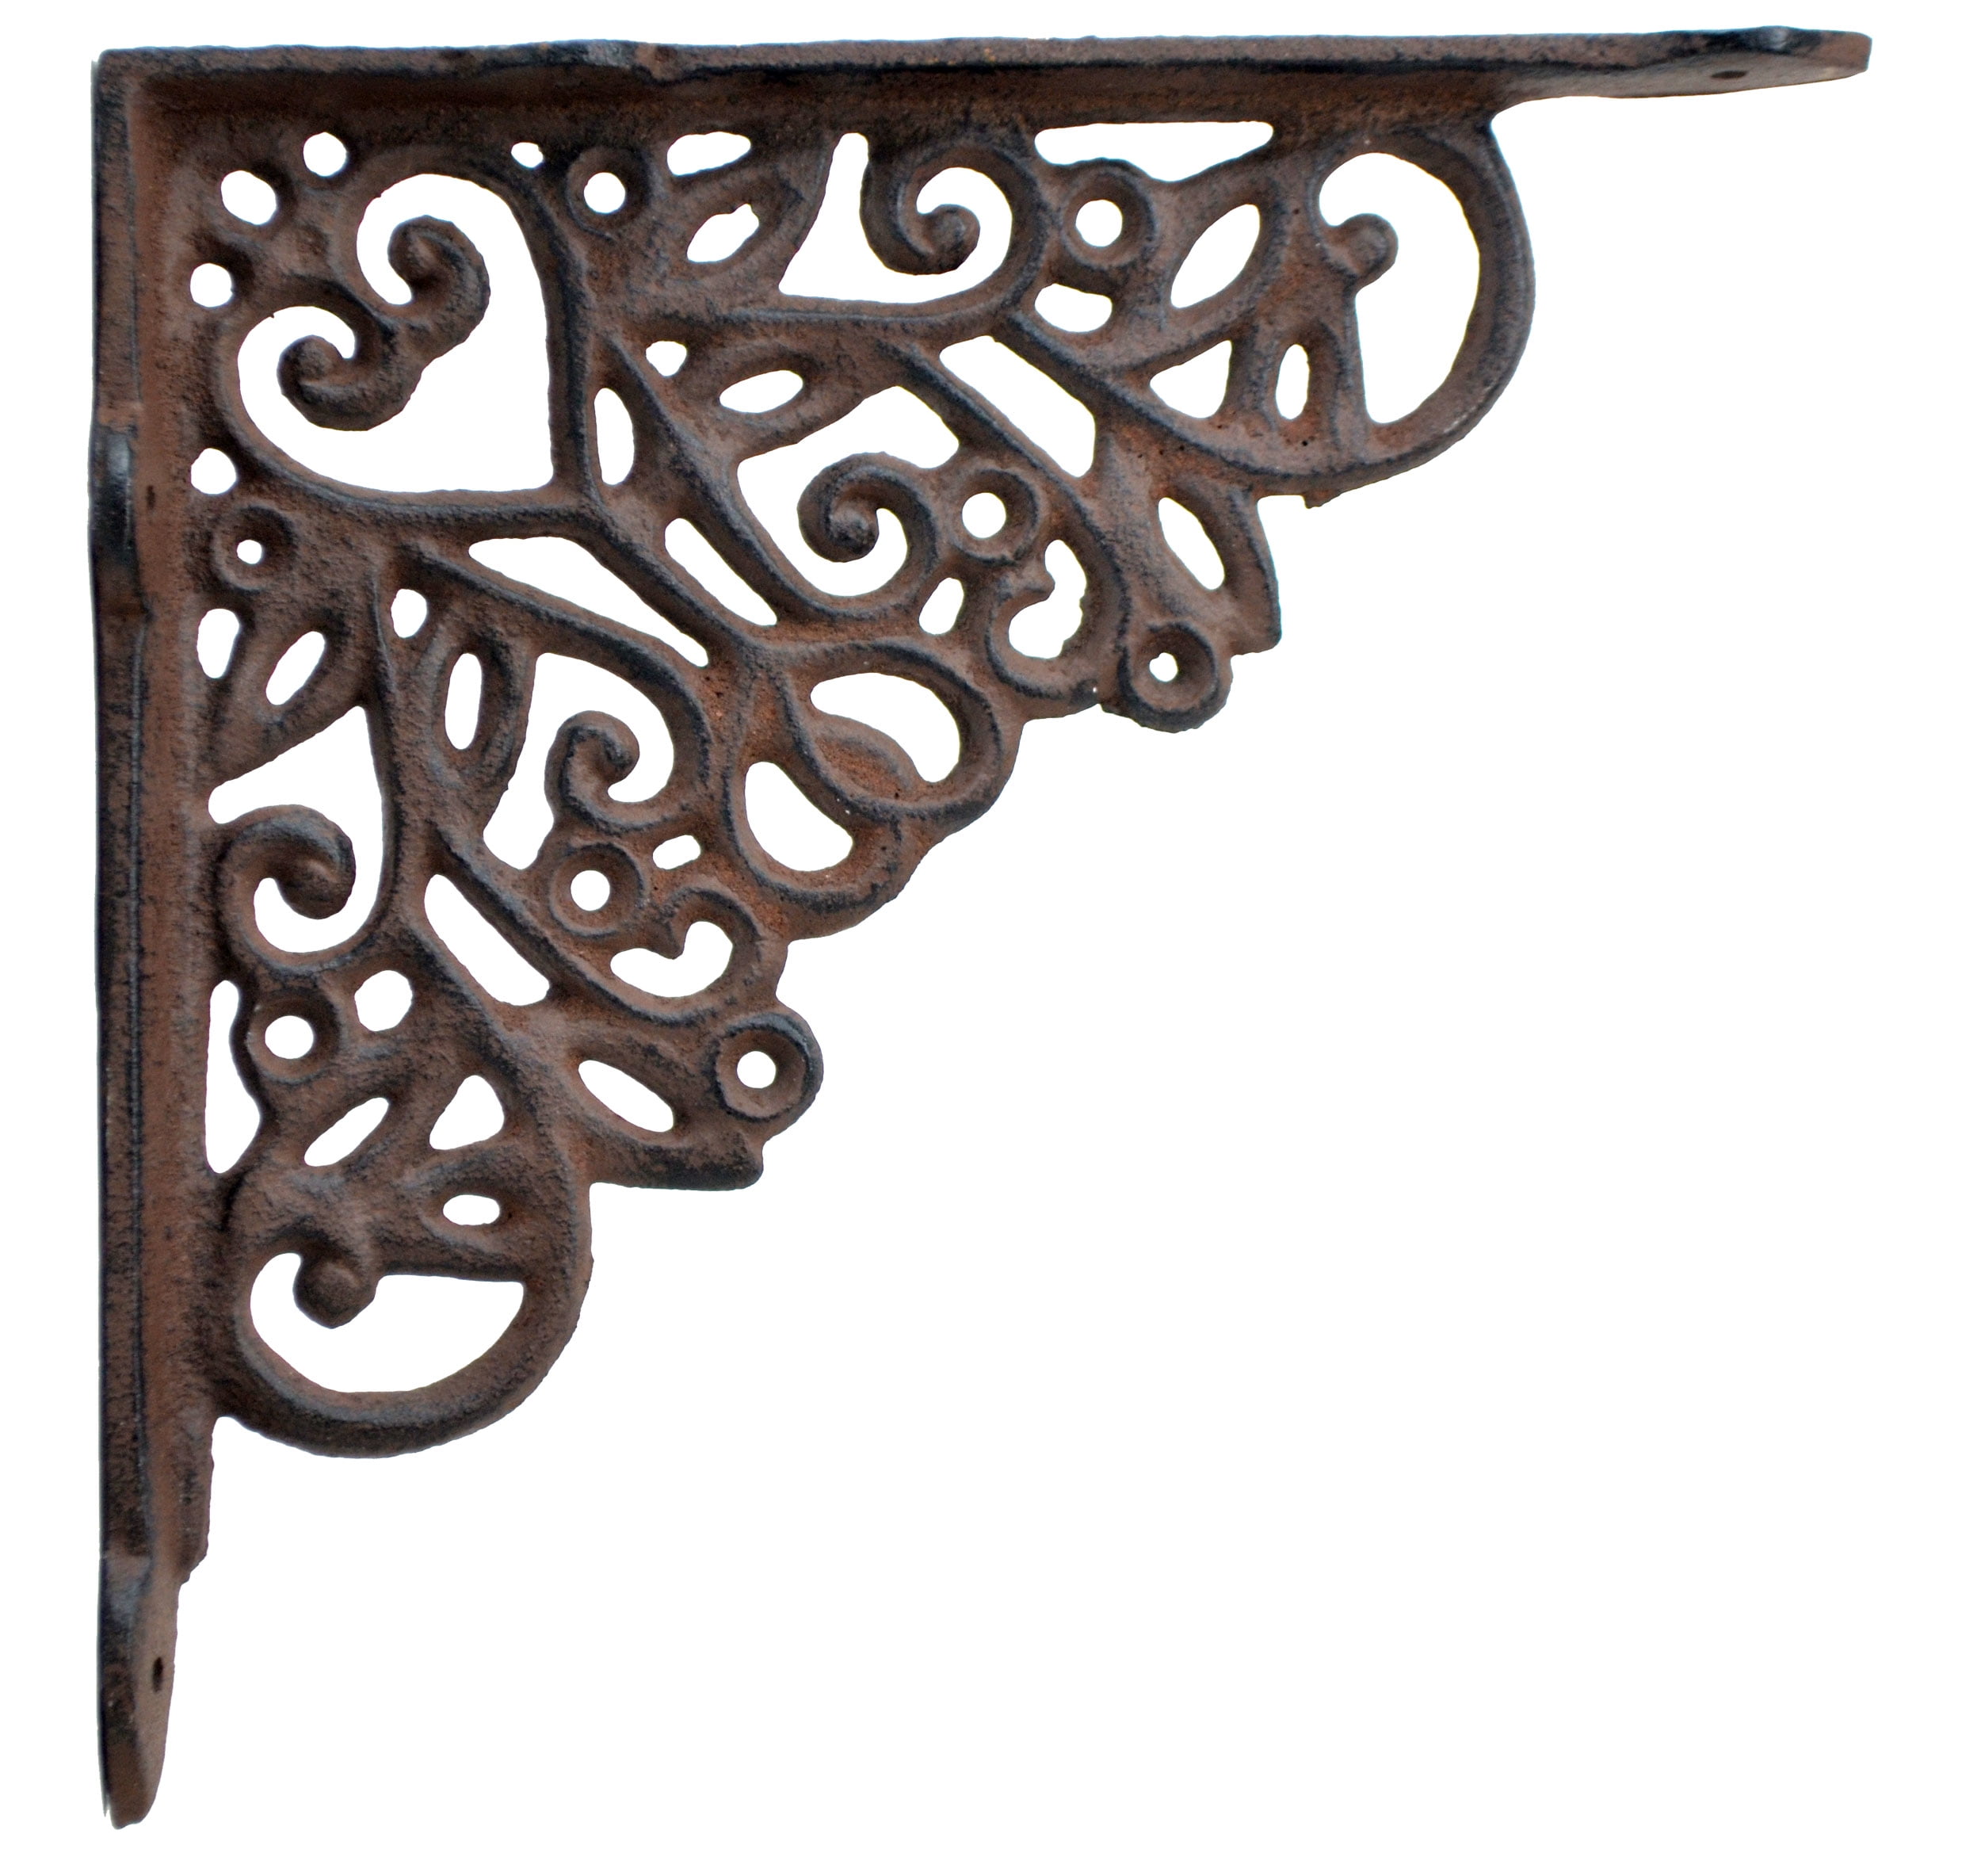 2 x Decorative Antique Shelf Brace L Bracket Rustic Brown Cast Iron Brace 